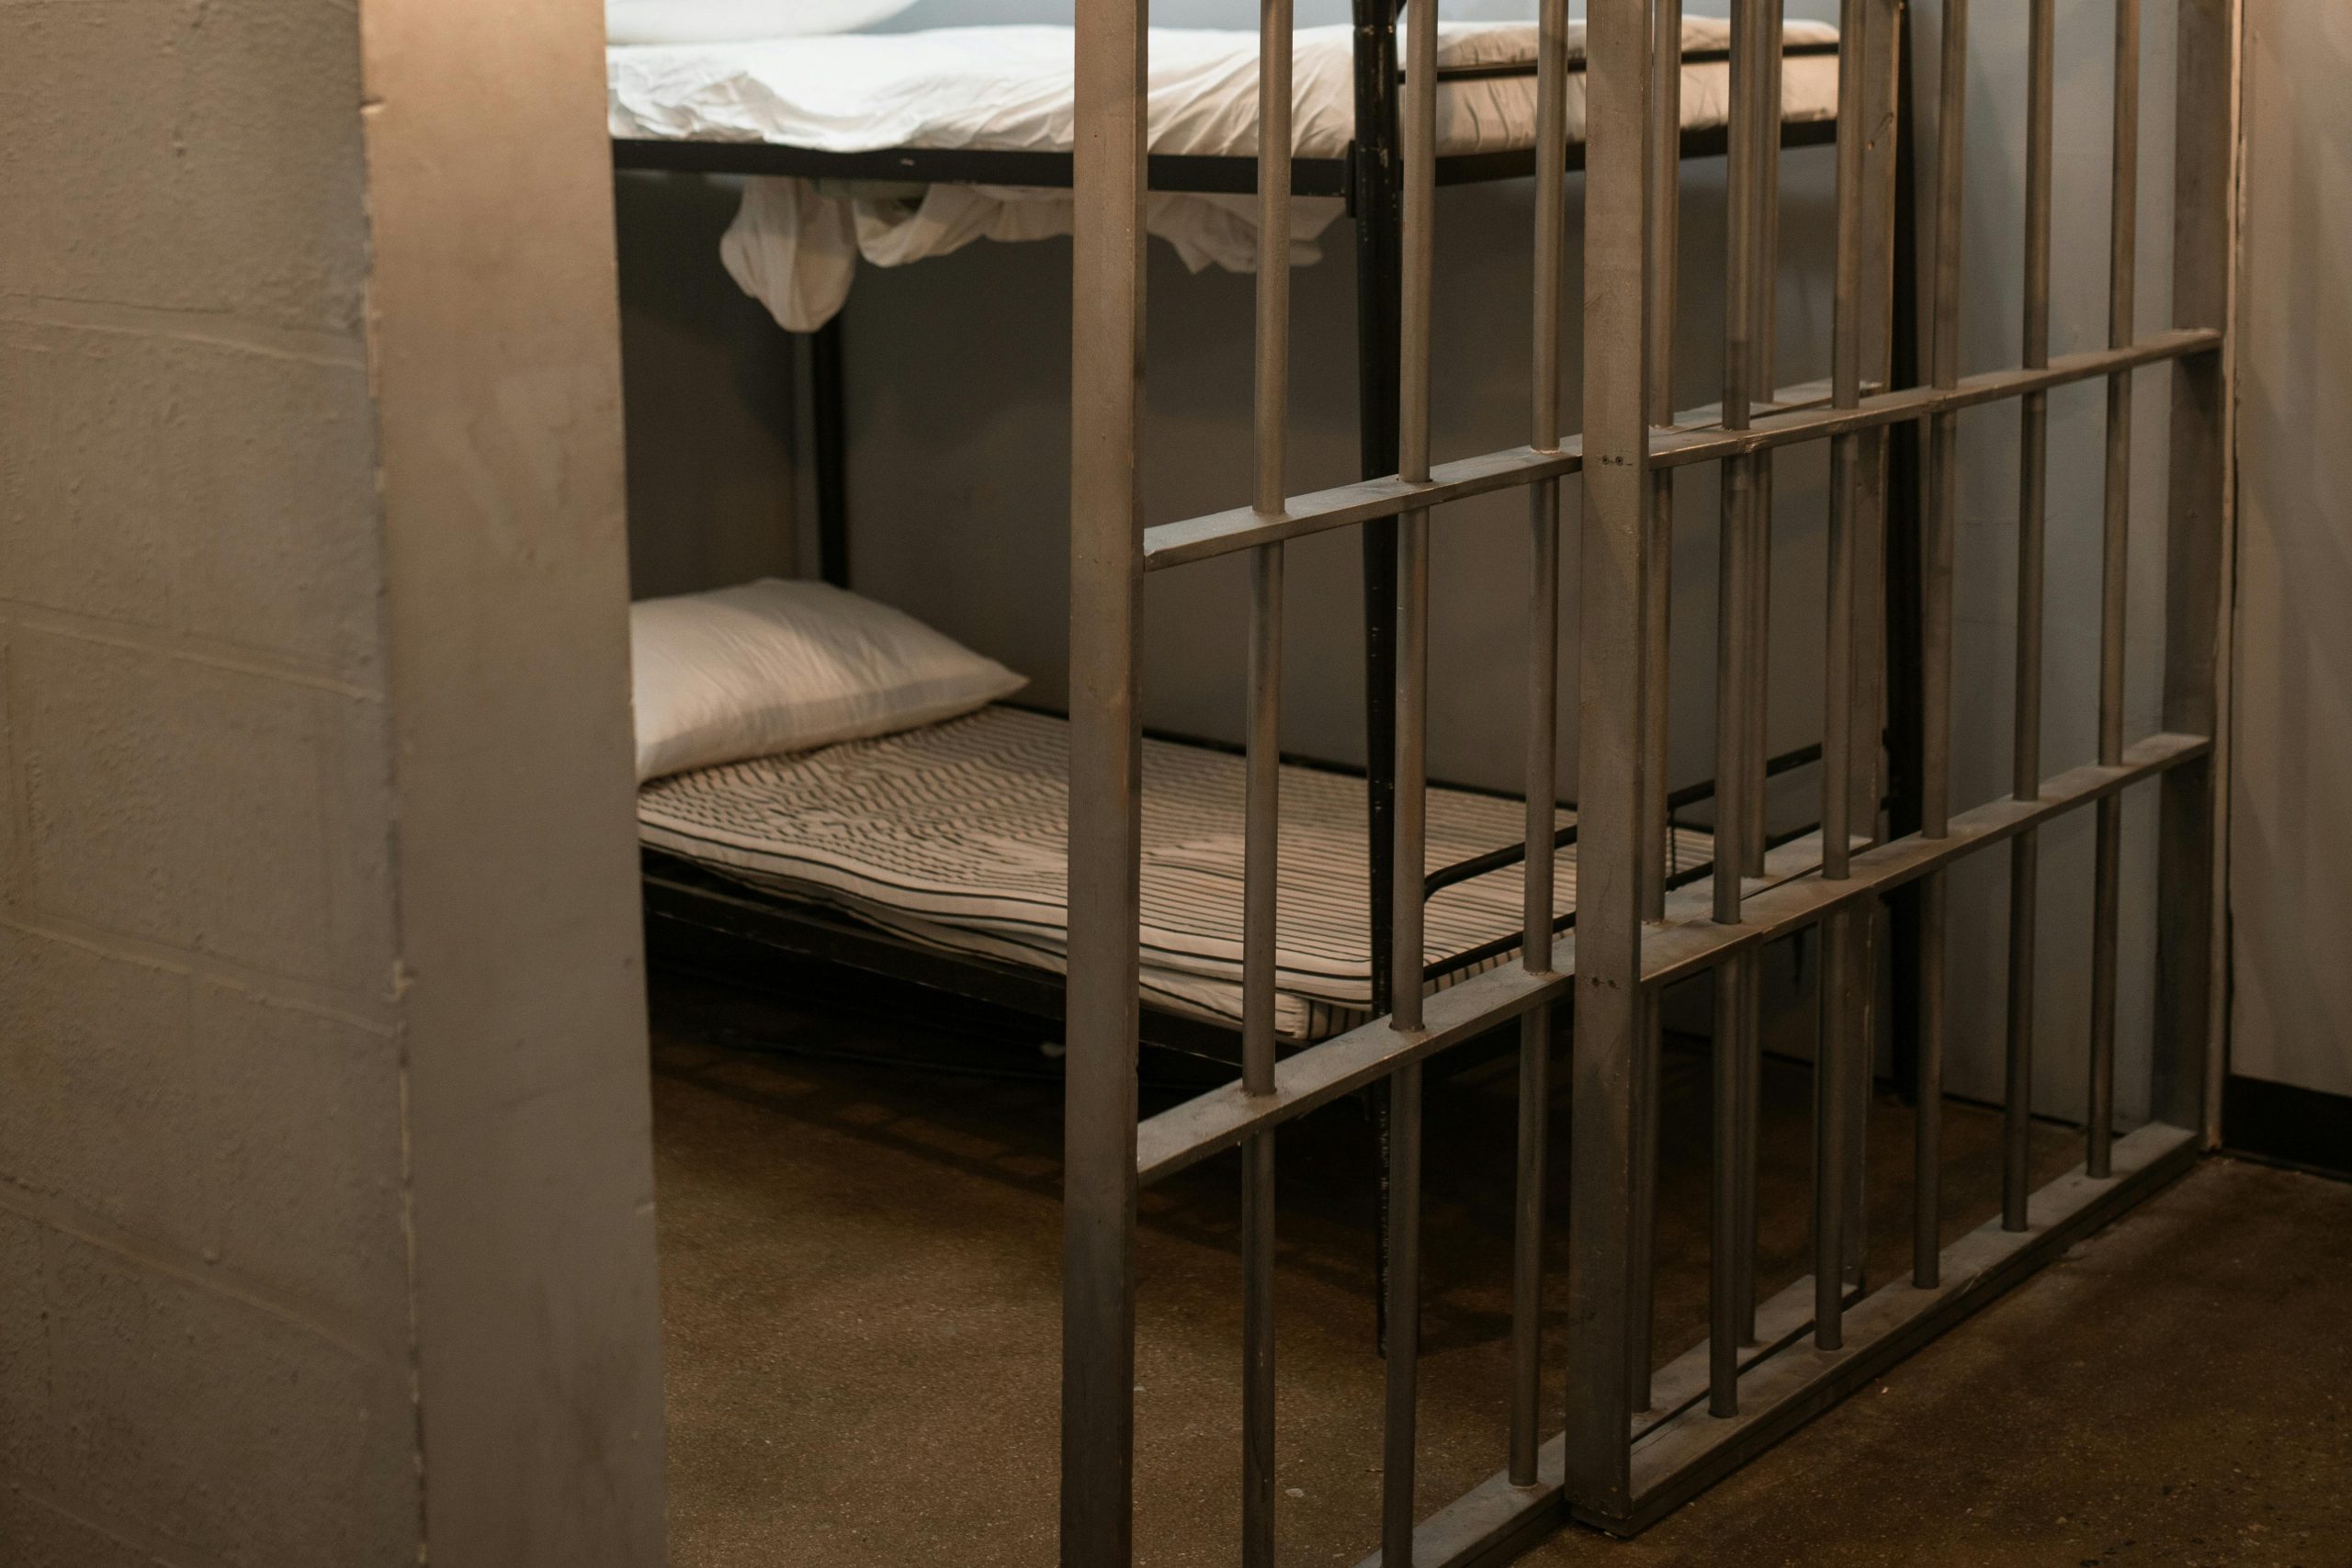 California Correctional Institution, Stabbing Claims Life of Inmate David Moreno - Inmate Lookup